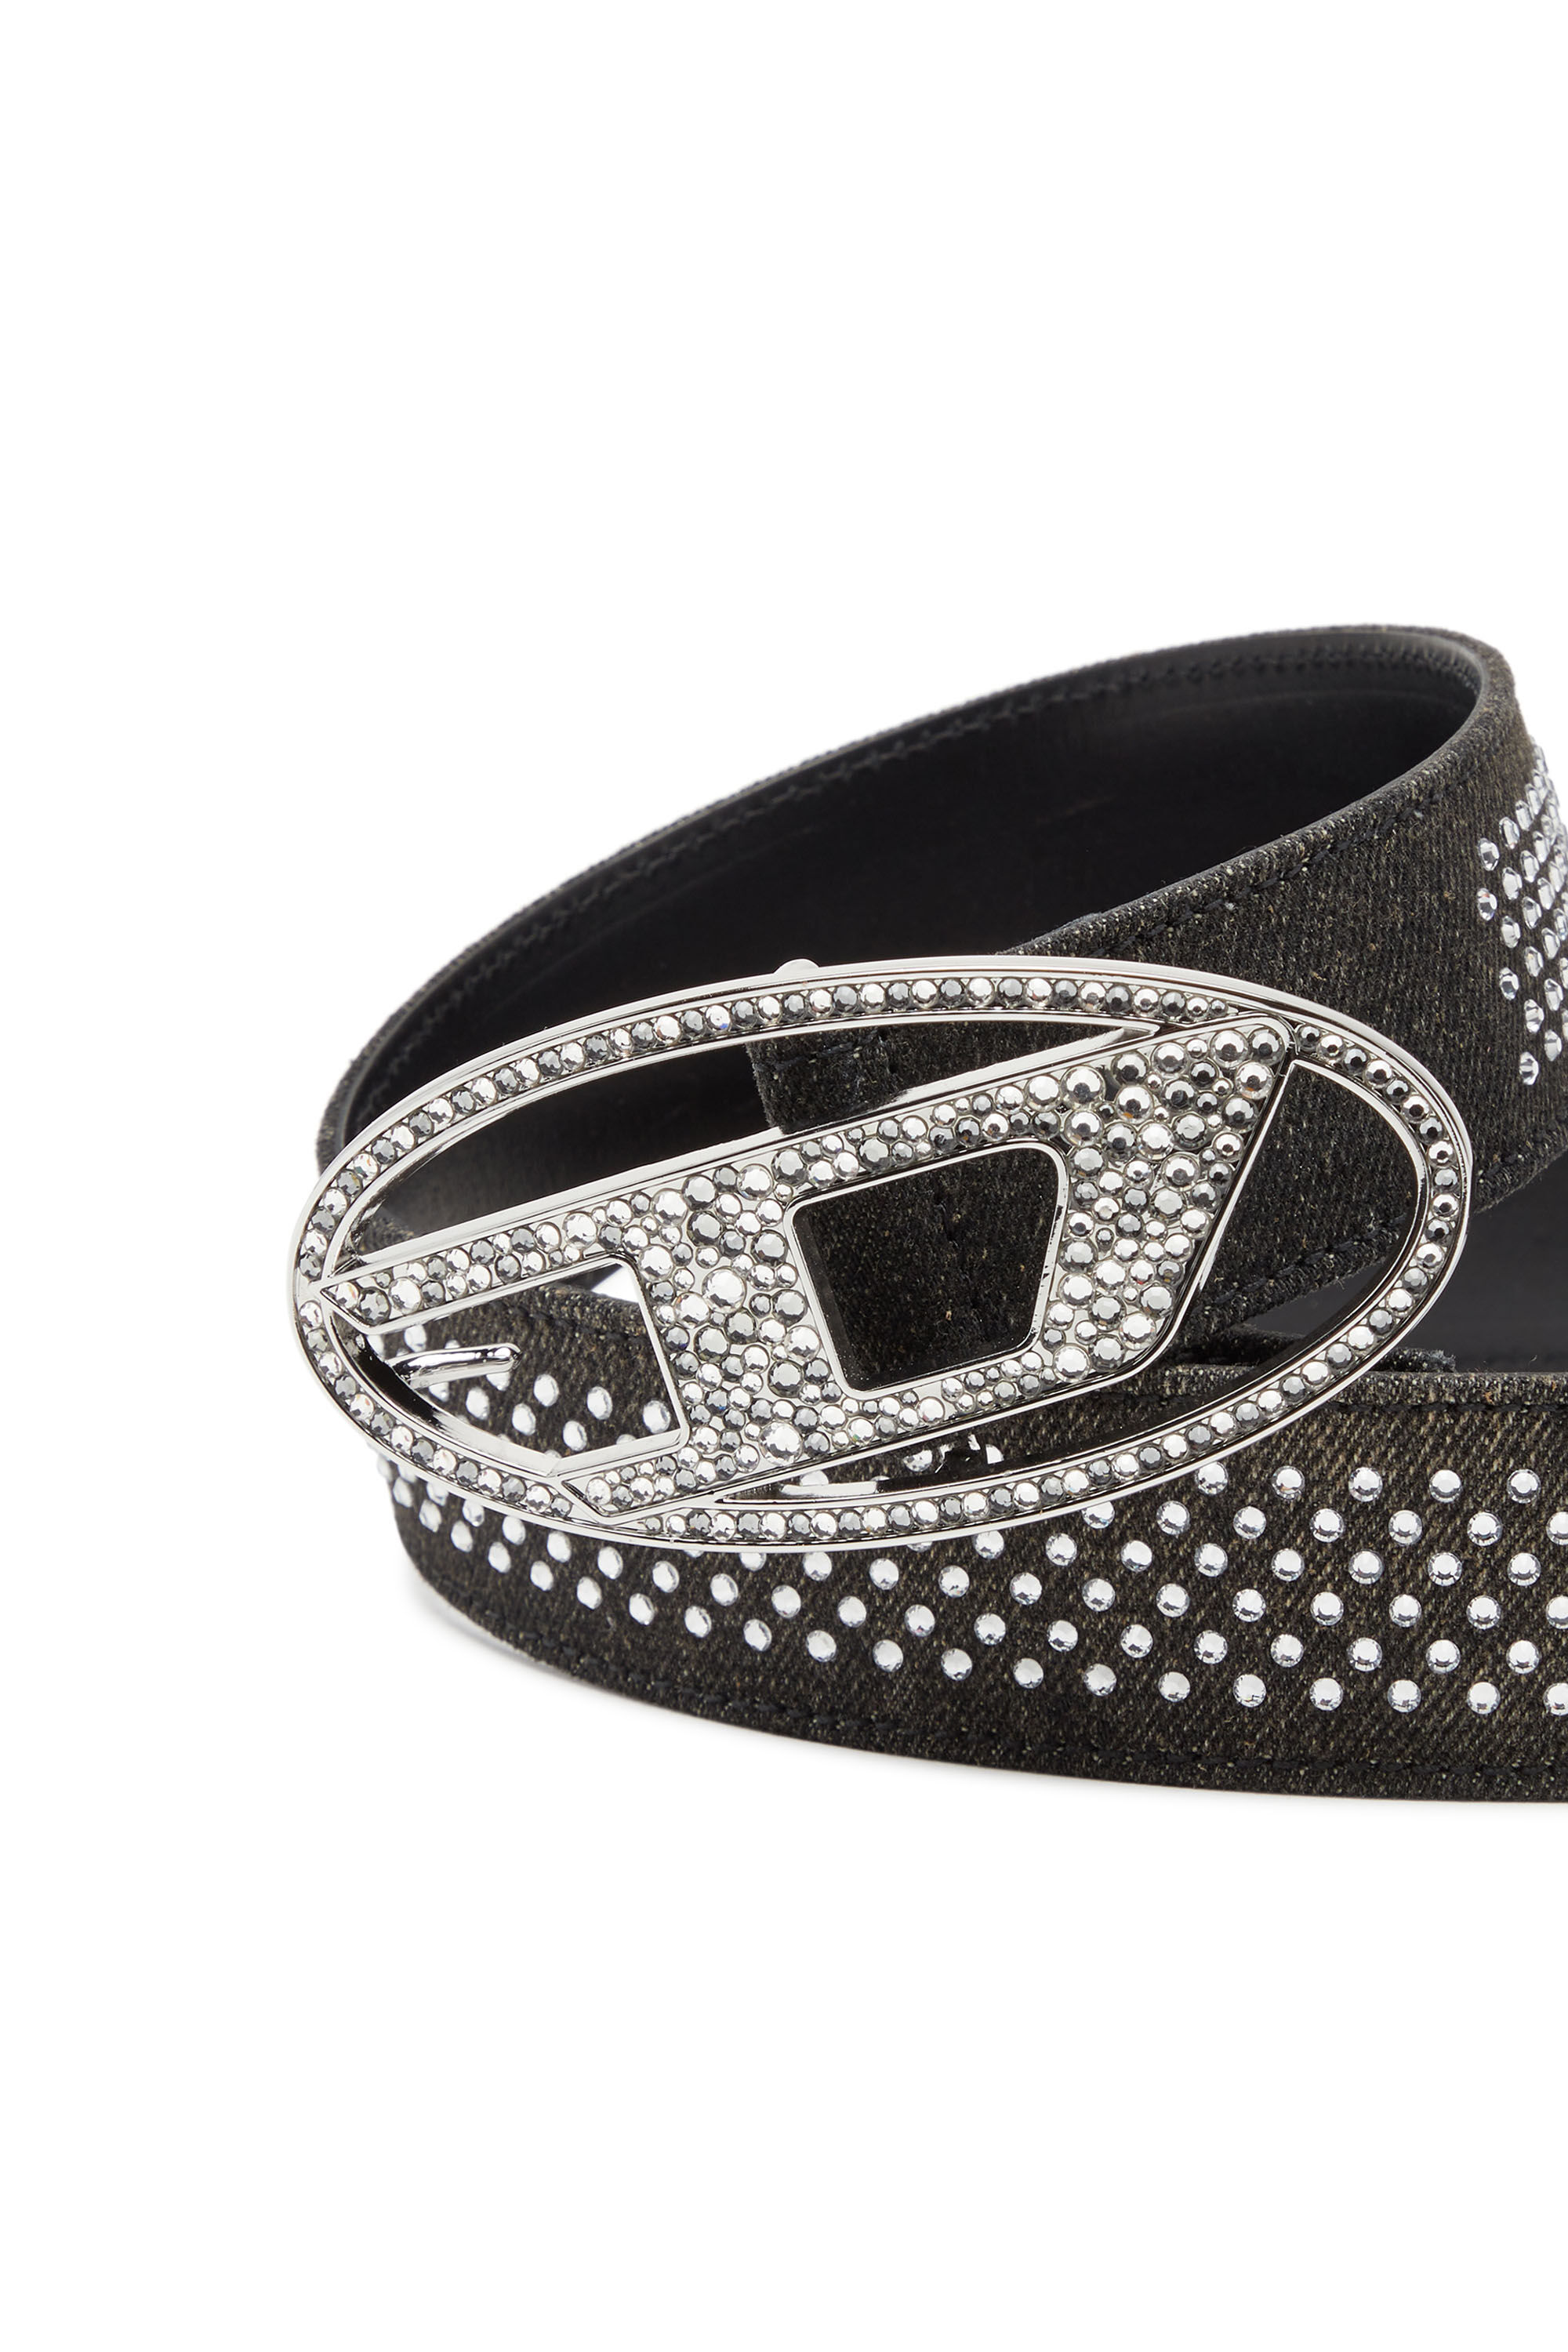 Women's Denim and leather belt with rhinestones | Black | Diesel